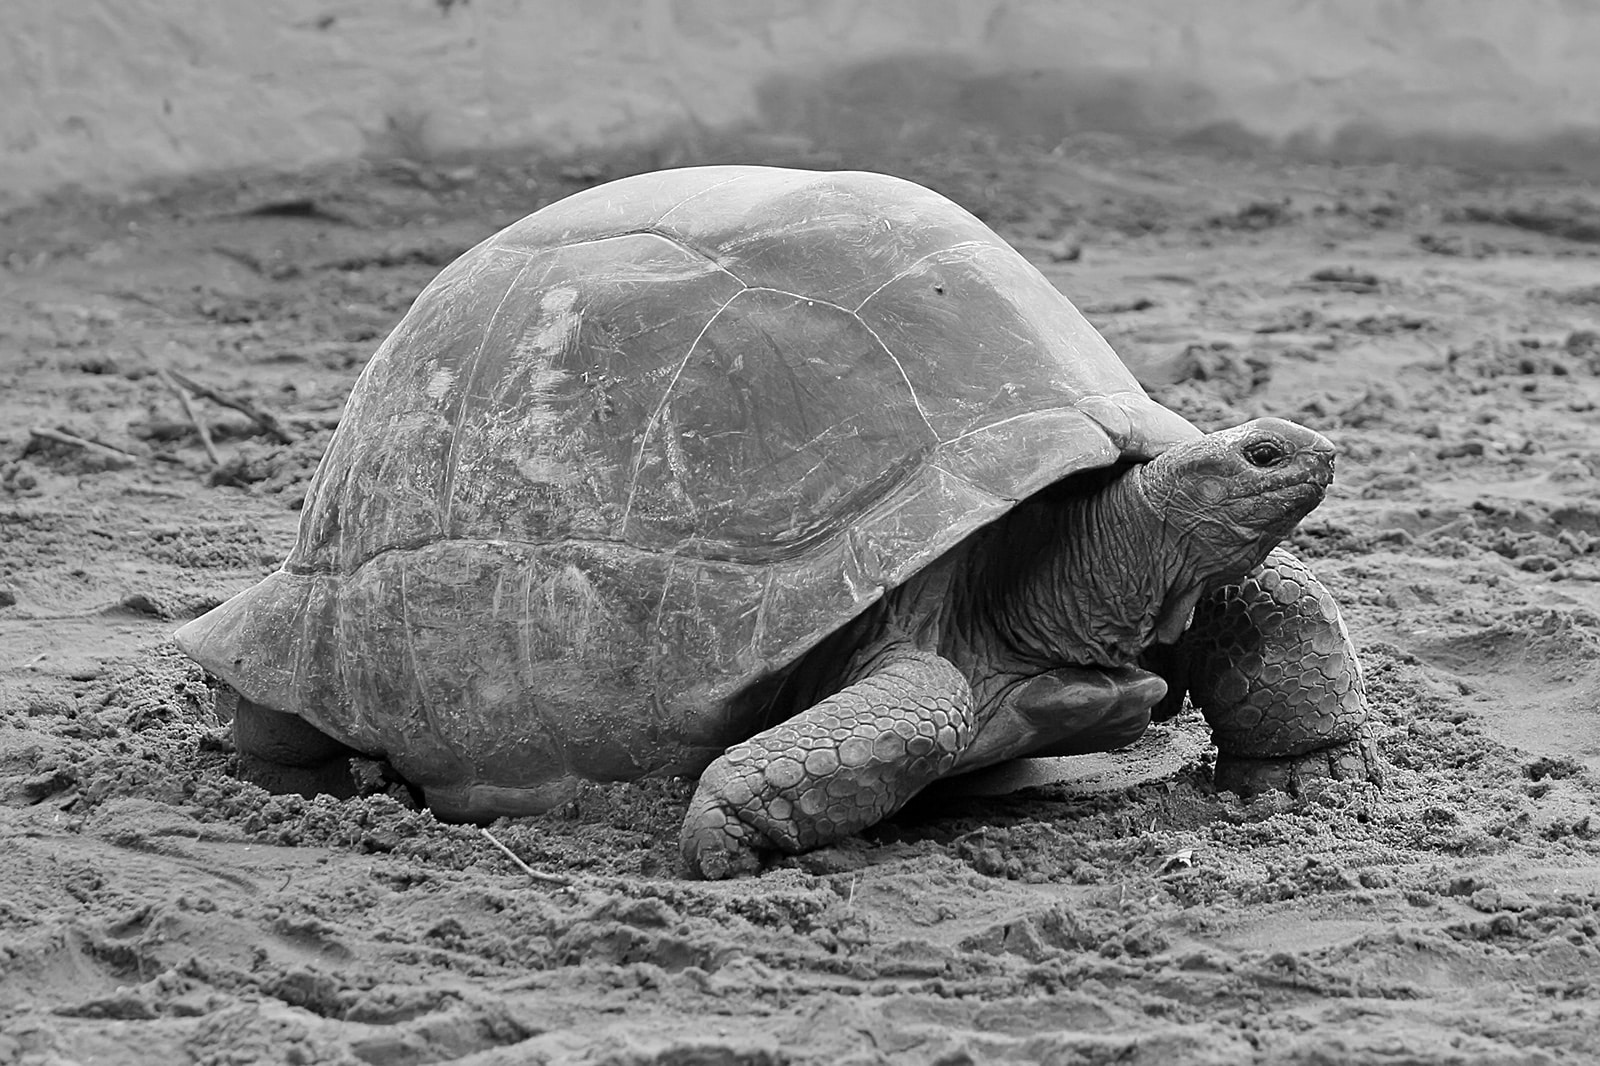 Aldabra giant tortoise (Geochelone gigantea)